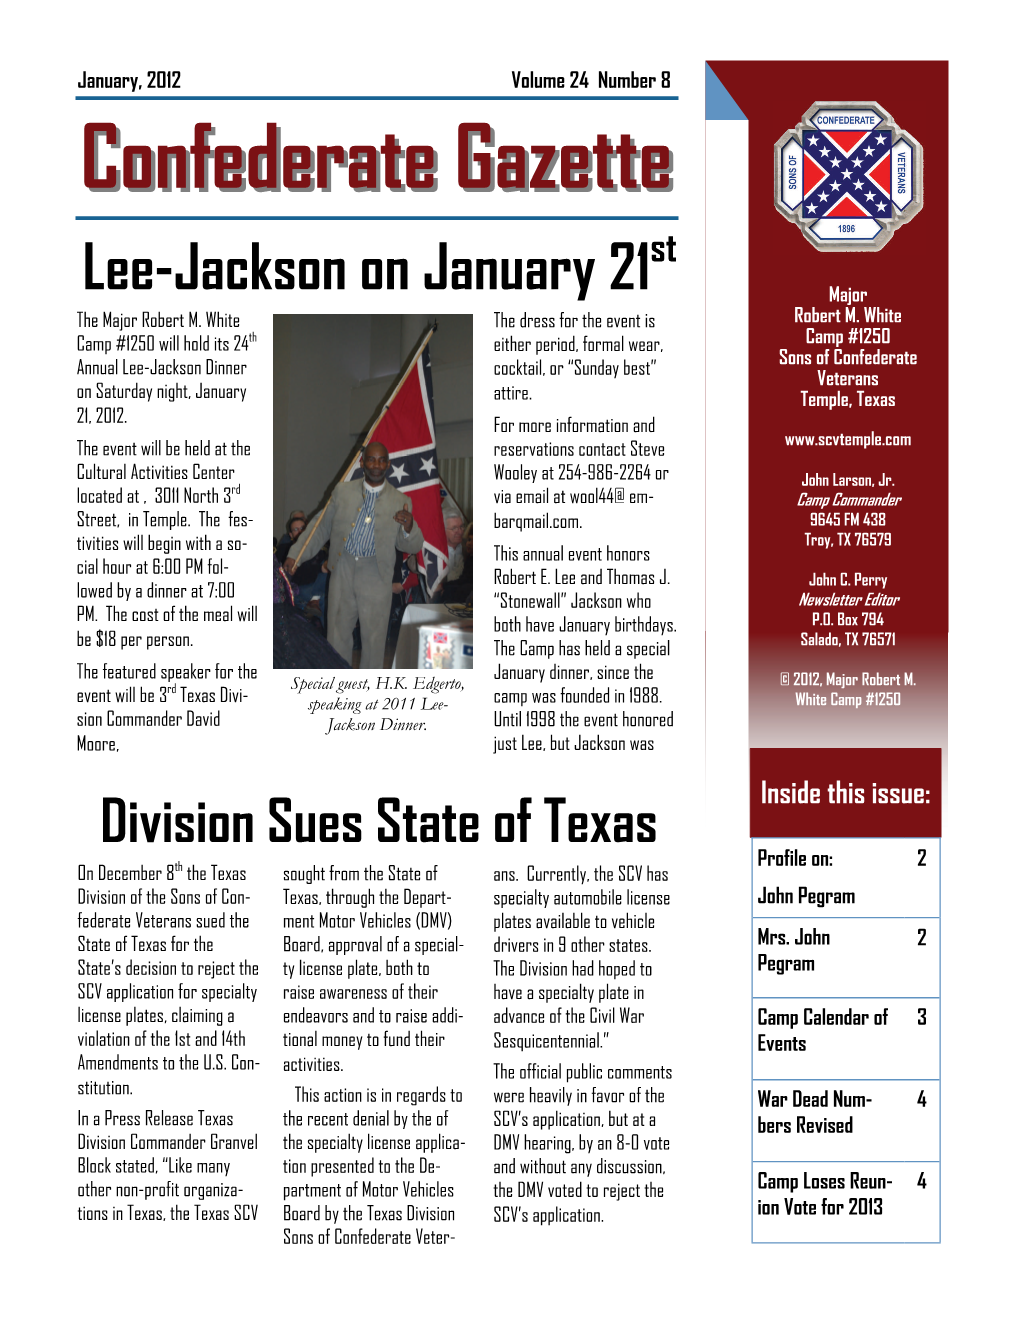 Confederate Gazettegazette St